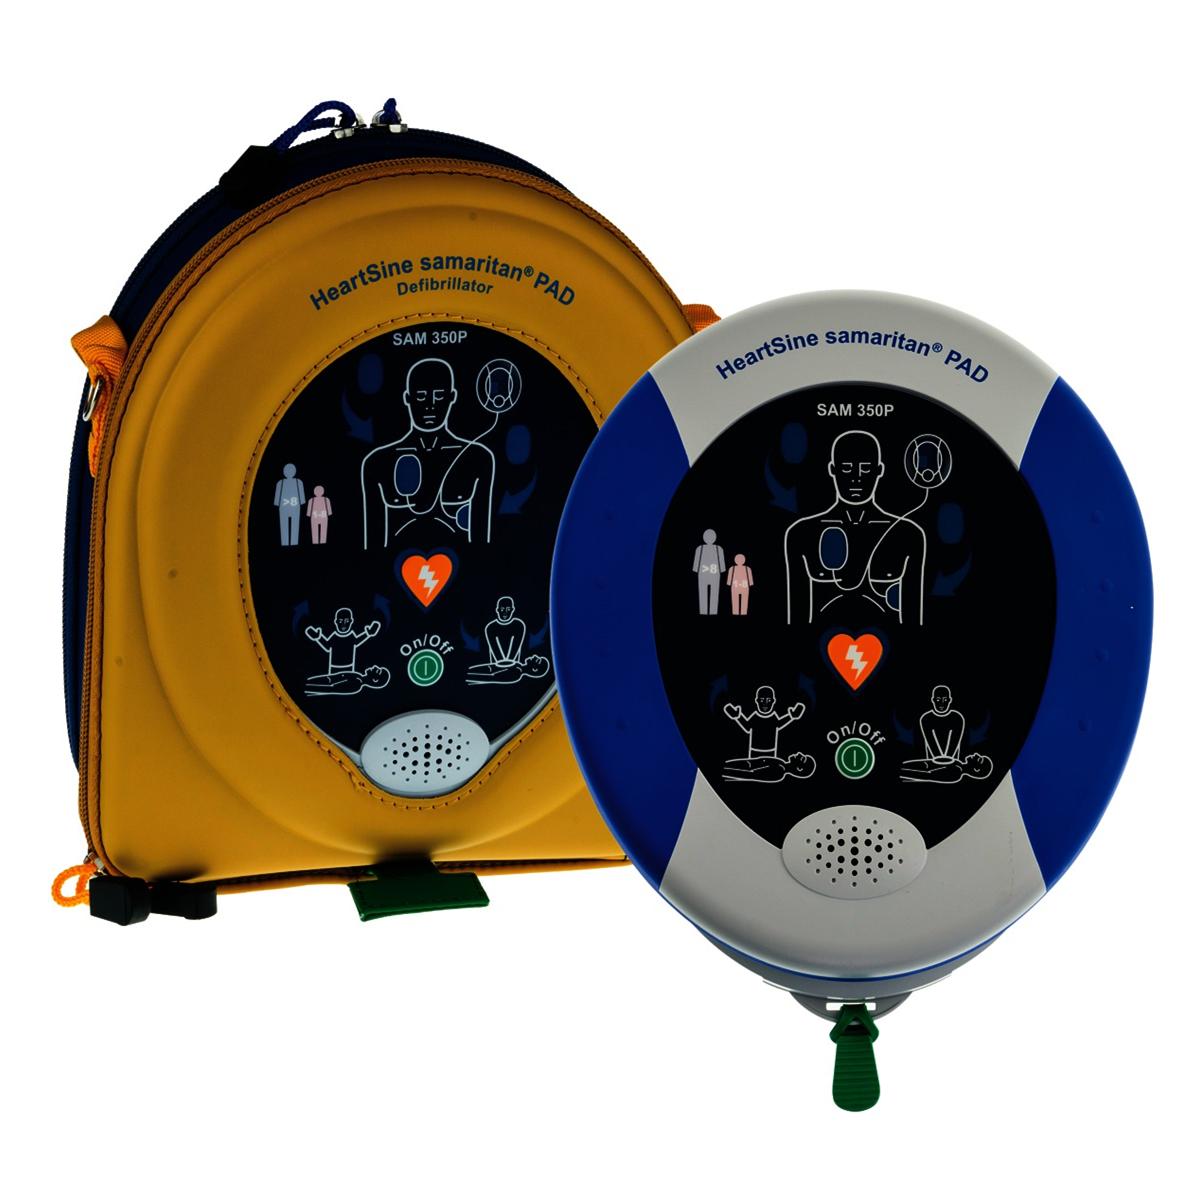 Samaritan HeartSine 350P Defibrillator from Kent Express